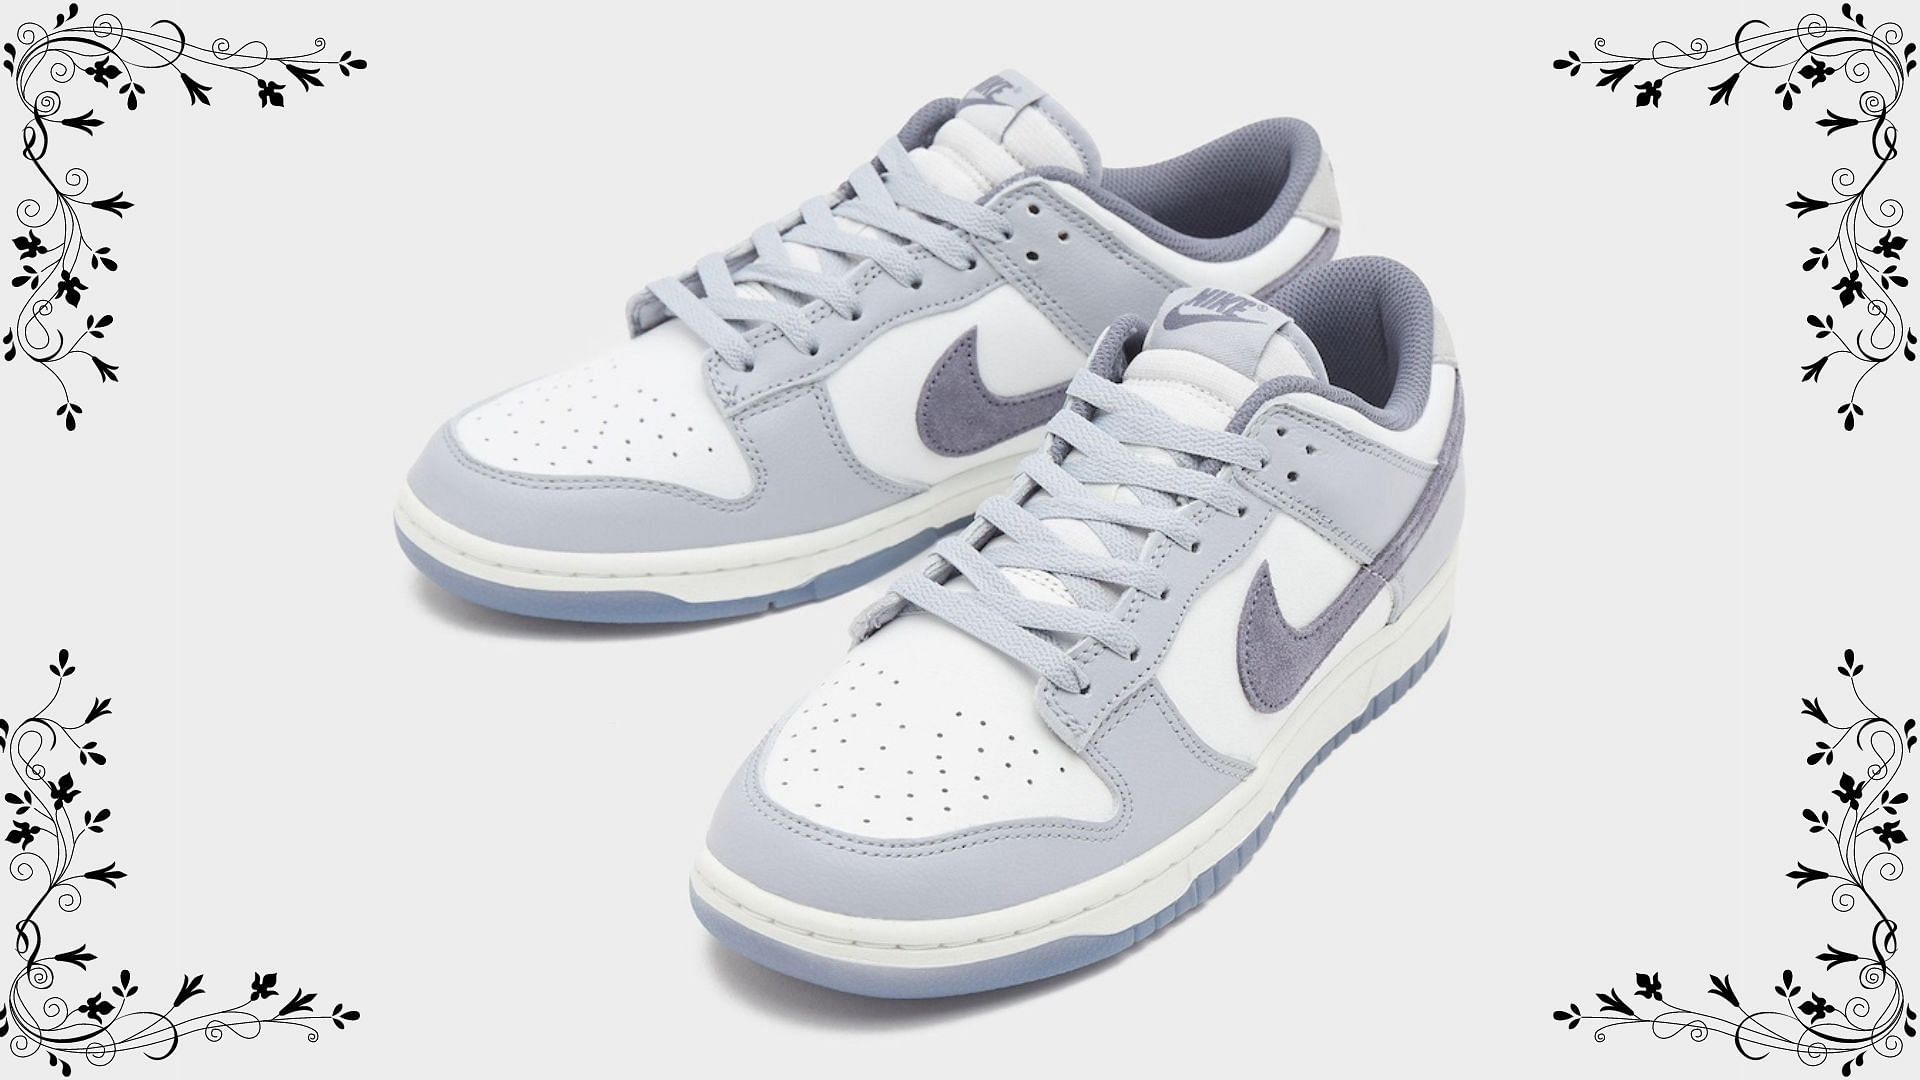 Light Carbon: Nike Dunk Low SE “Light Carbon” shoes: Where to get